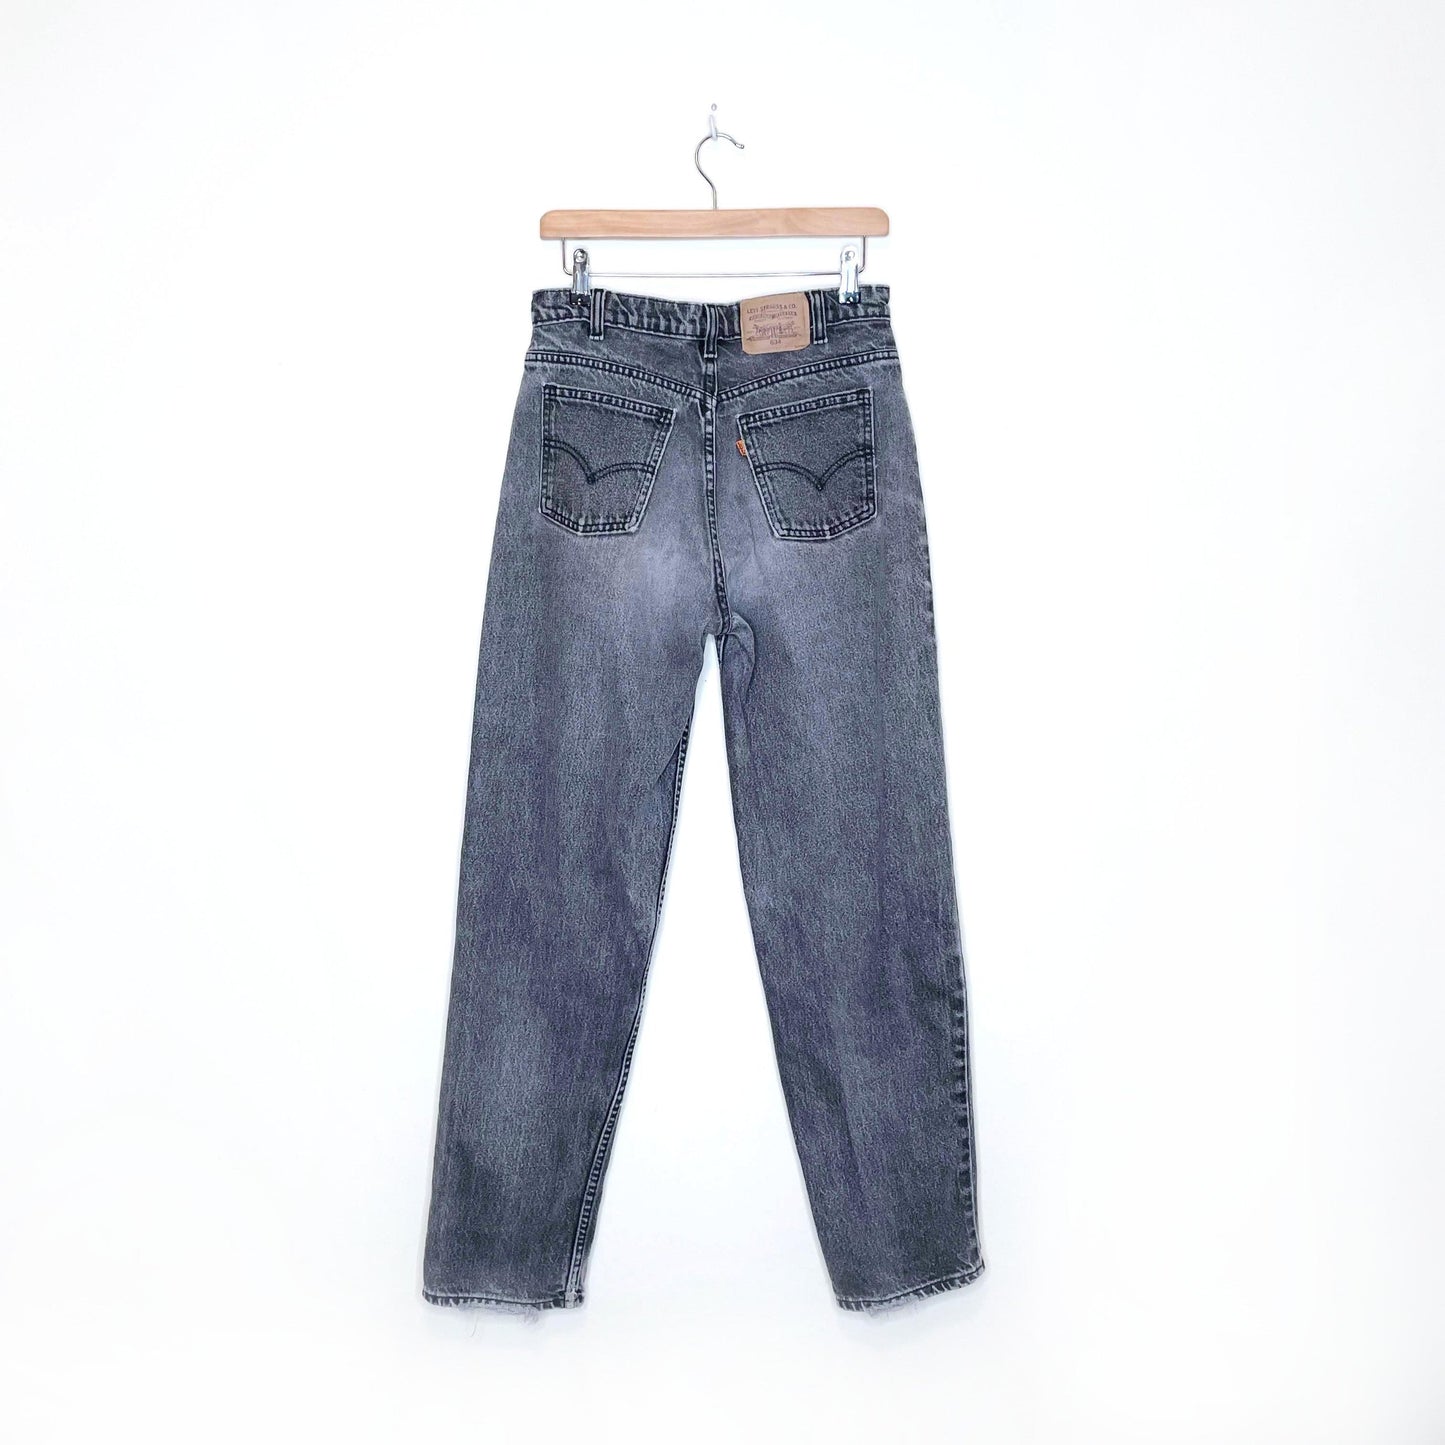 vintage 90's levi's orange tab 634 faded black jeans - size 31M / 28W